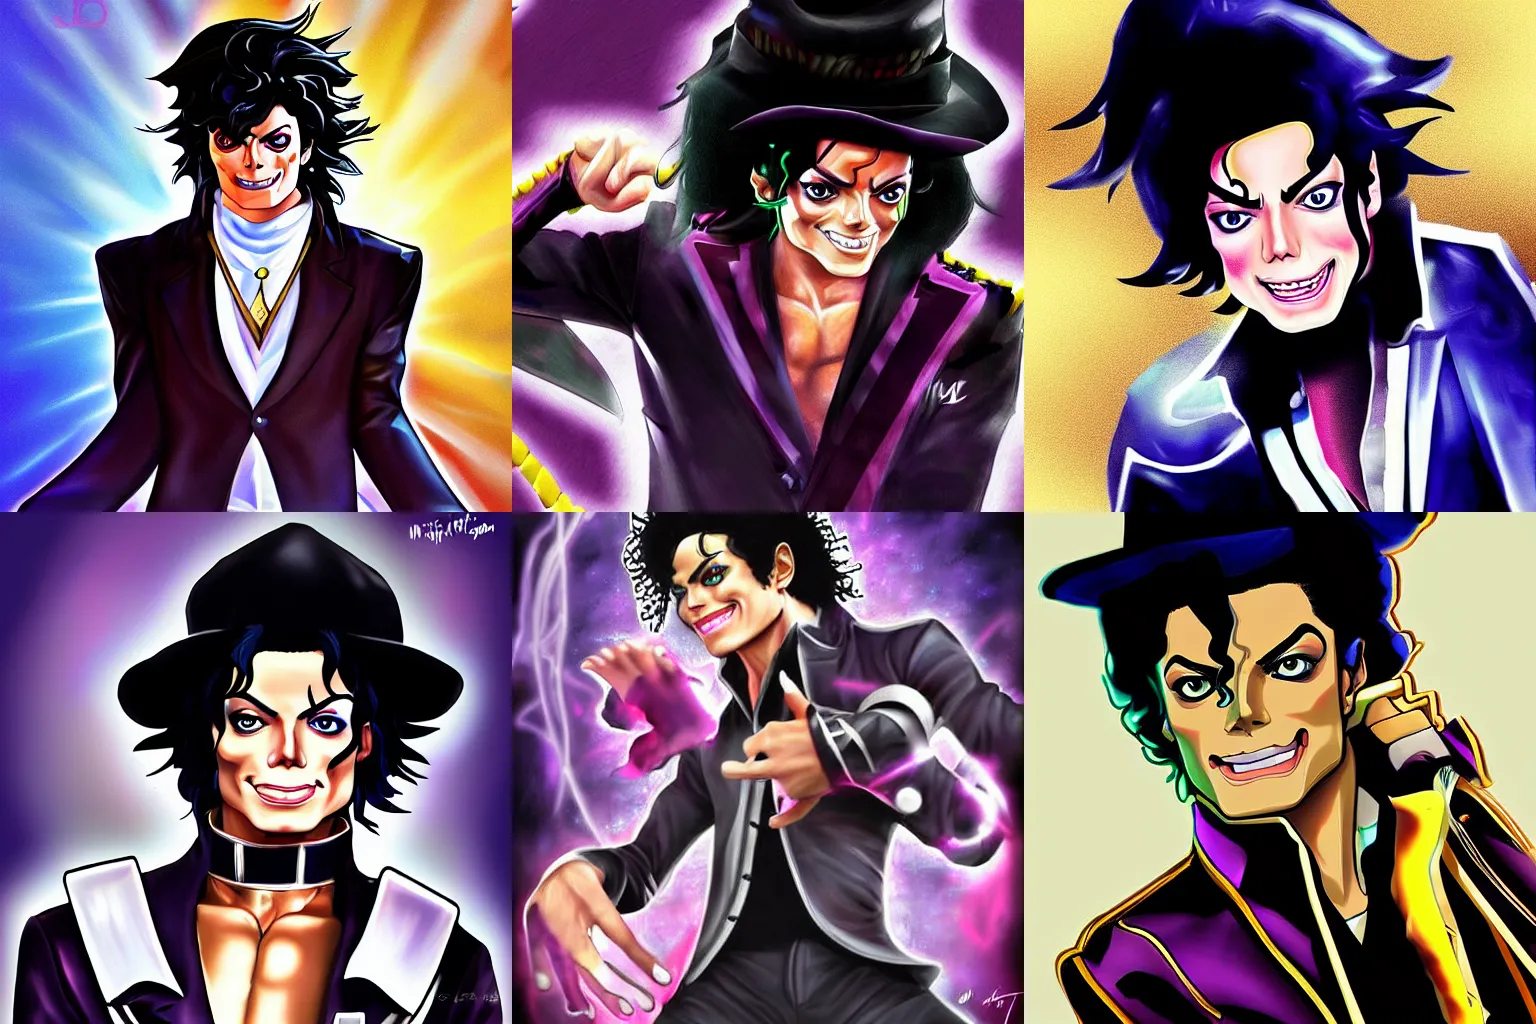 Prompt: digital painting of Michael Jackson posing as a character in Jojo Bizarre Adventure, trending on Artstation